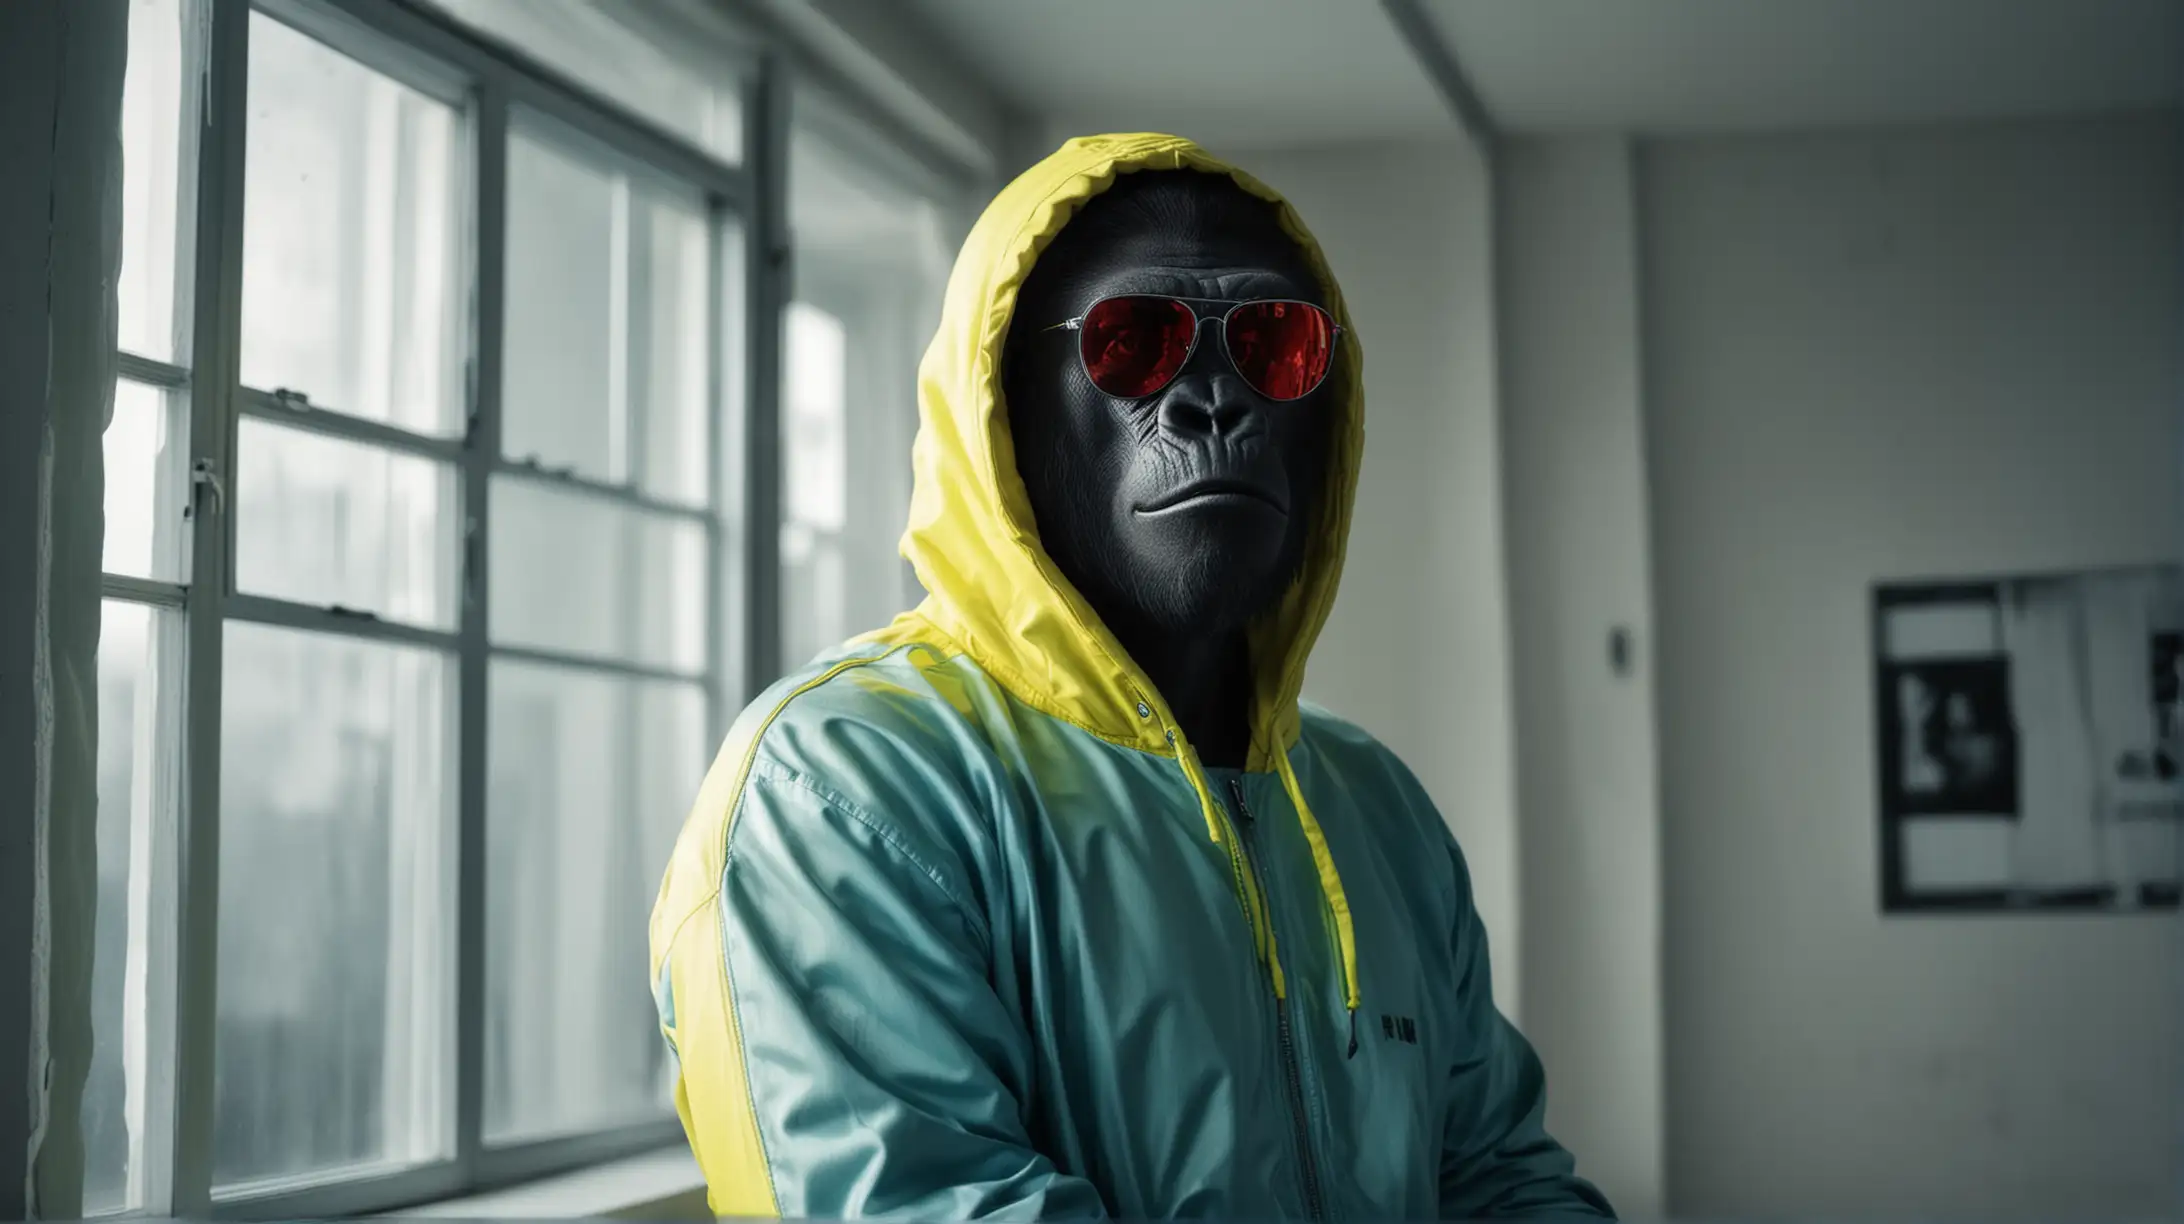 Sleek Gorilla in Yellow Tracksuit Strikes High Fashion Pose in Dark Salon with Neon Lights